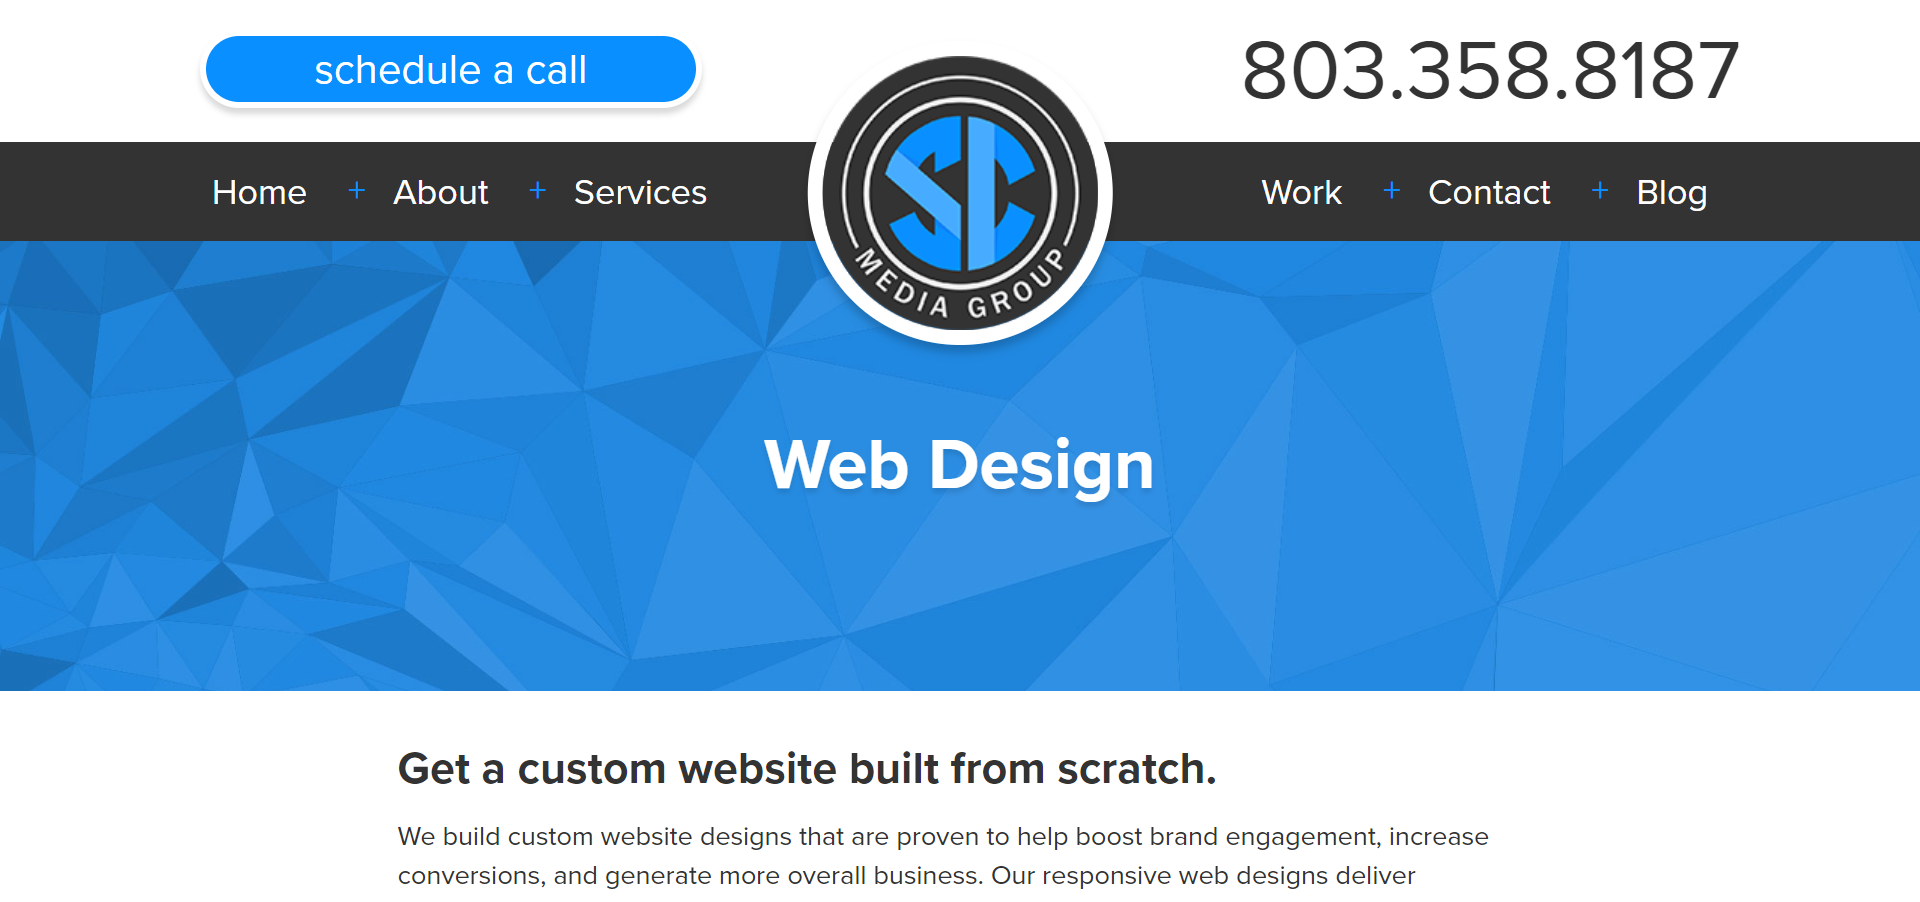 SC Media Group Web Design Agency